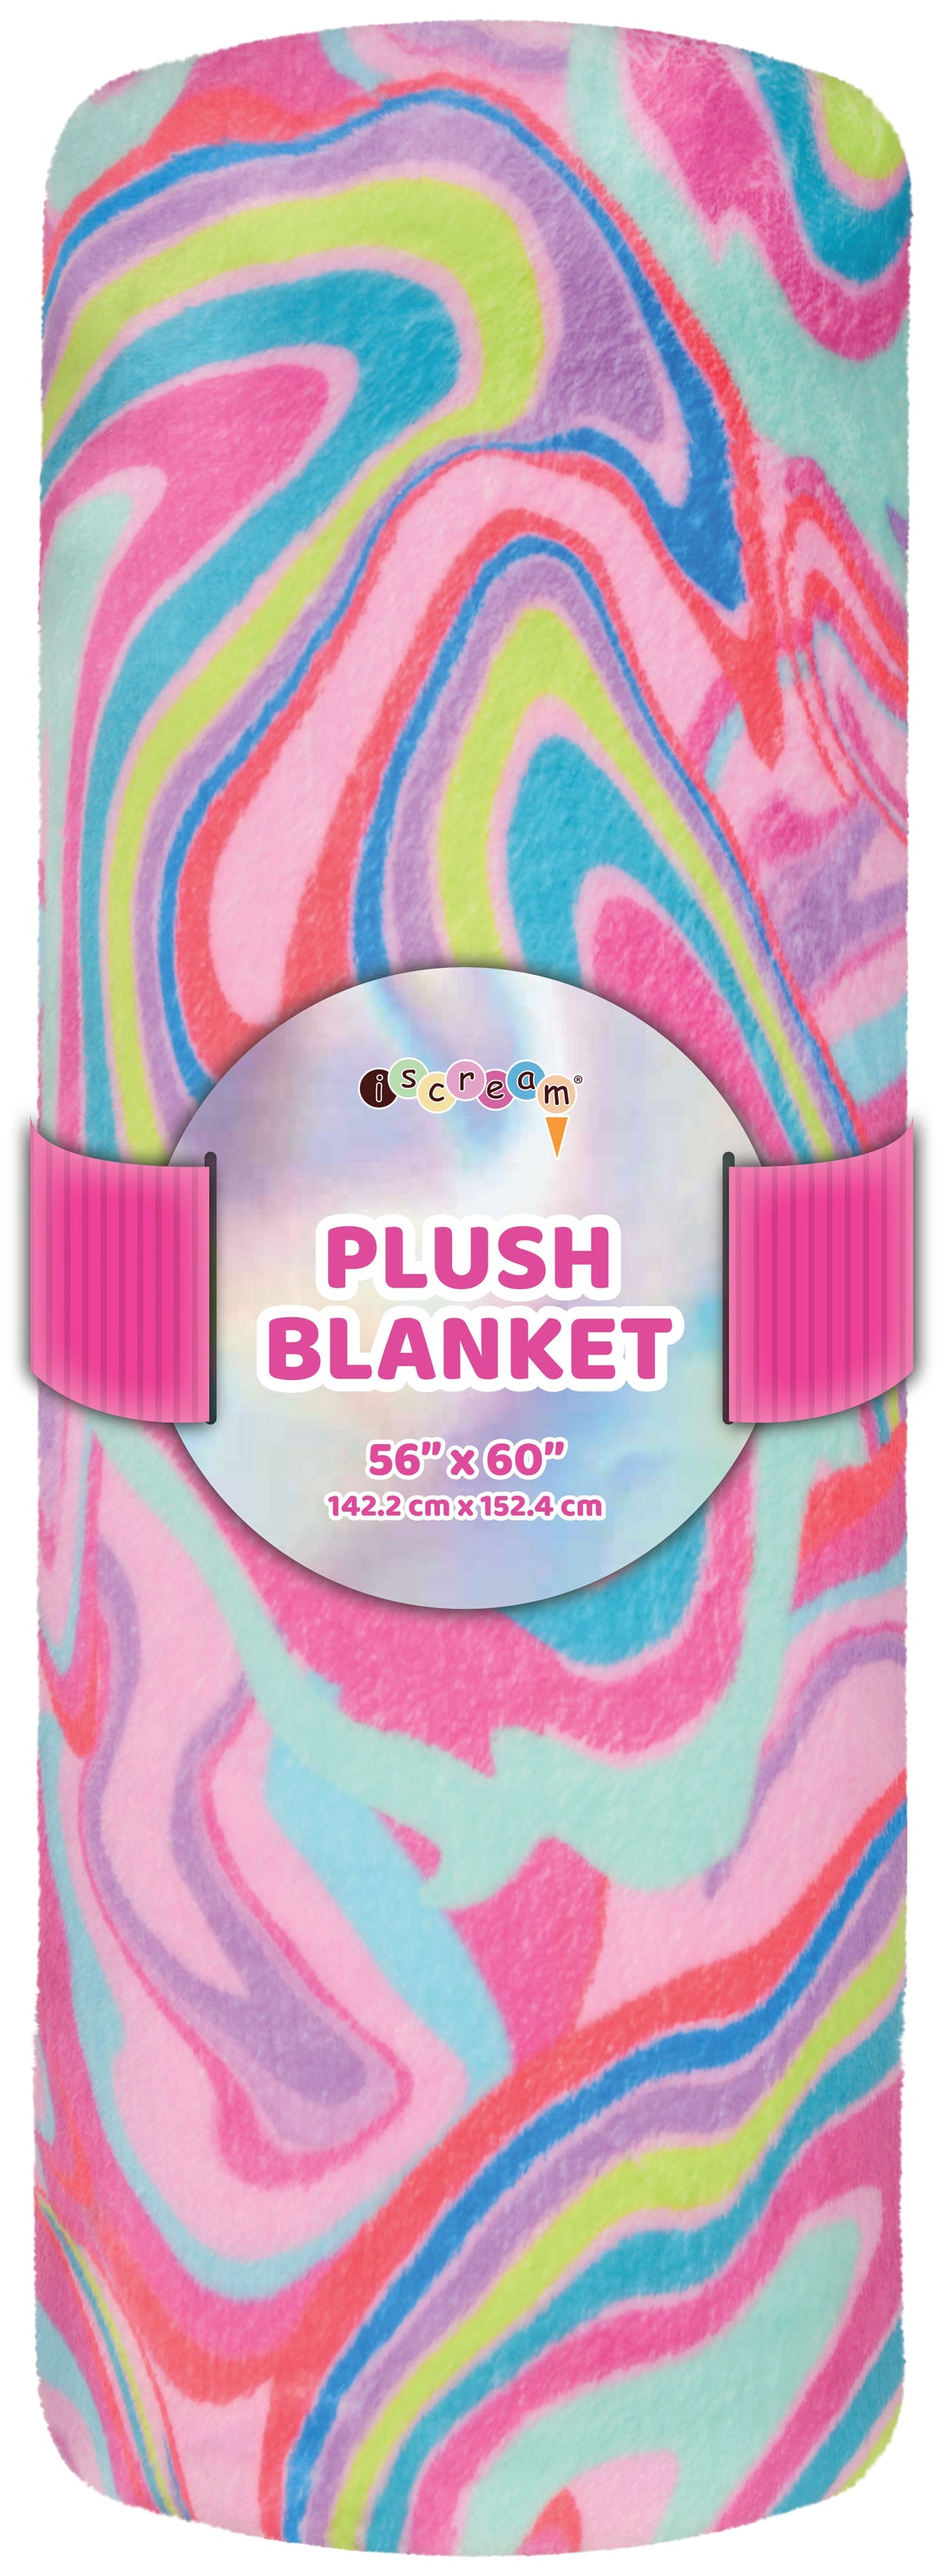 Iscream Color Swirl Plush Blanket